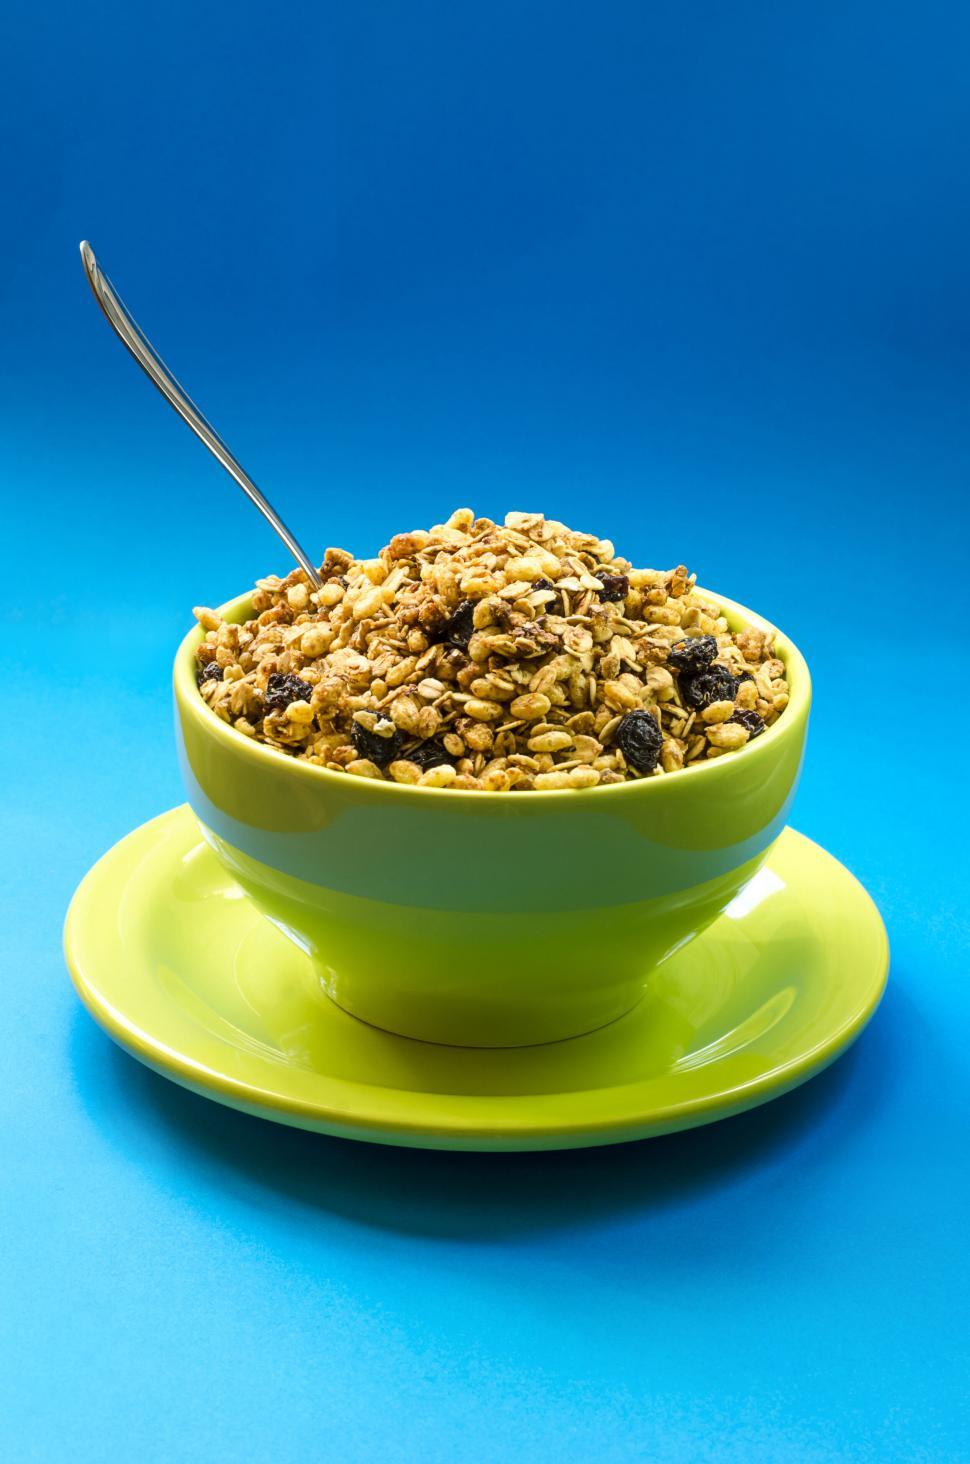 Free Image of Bowl of granola with raisins on vibrant background 